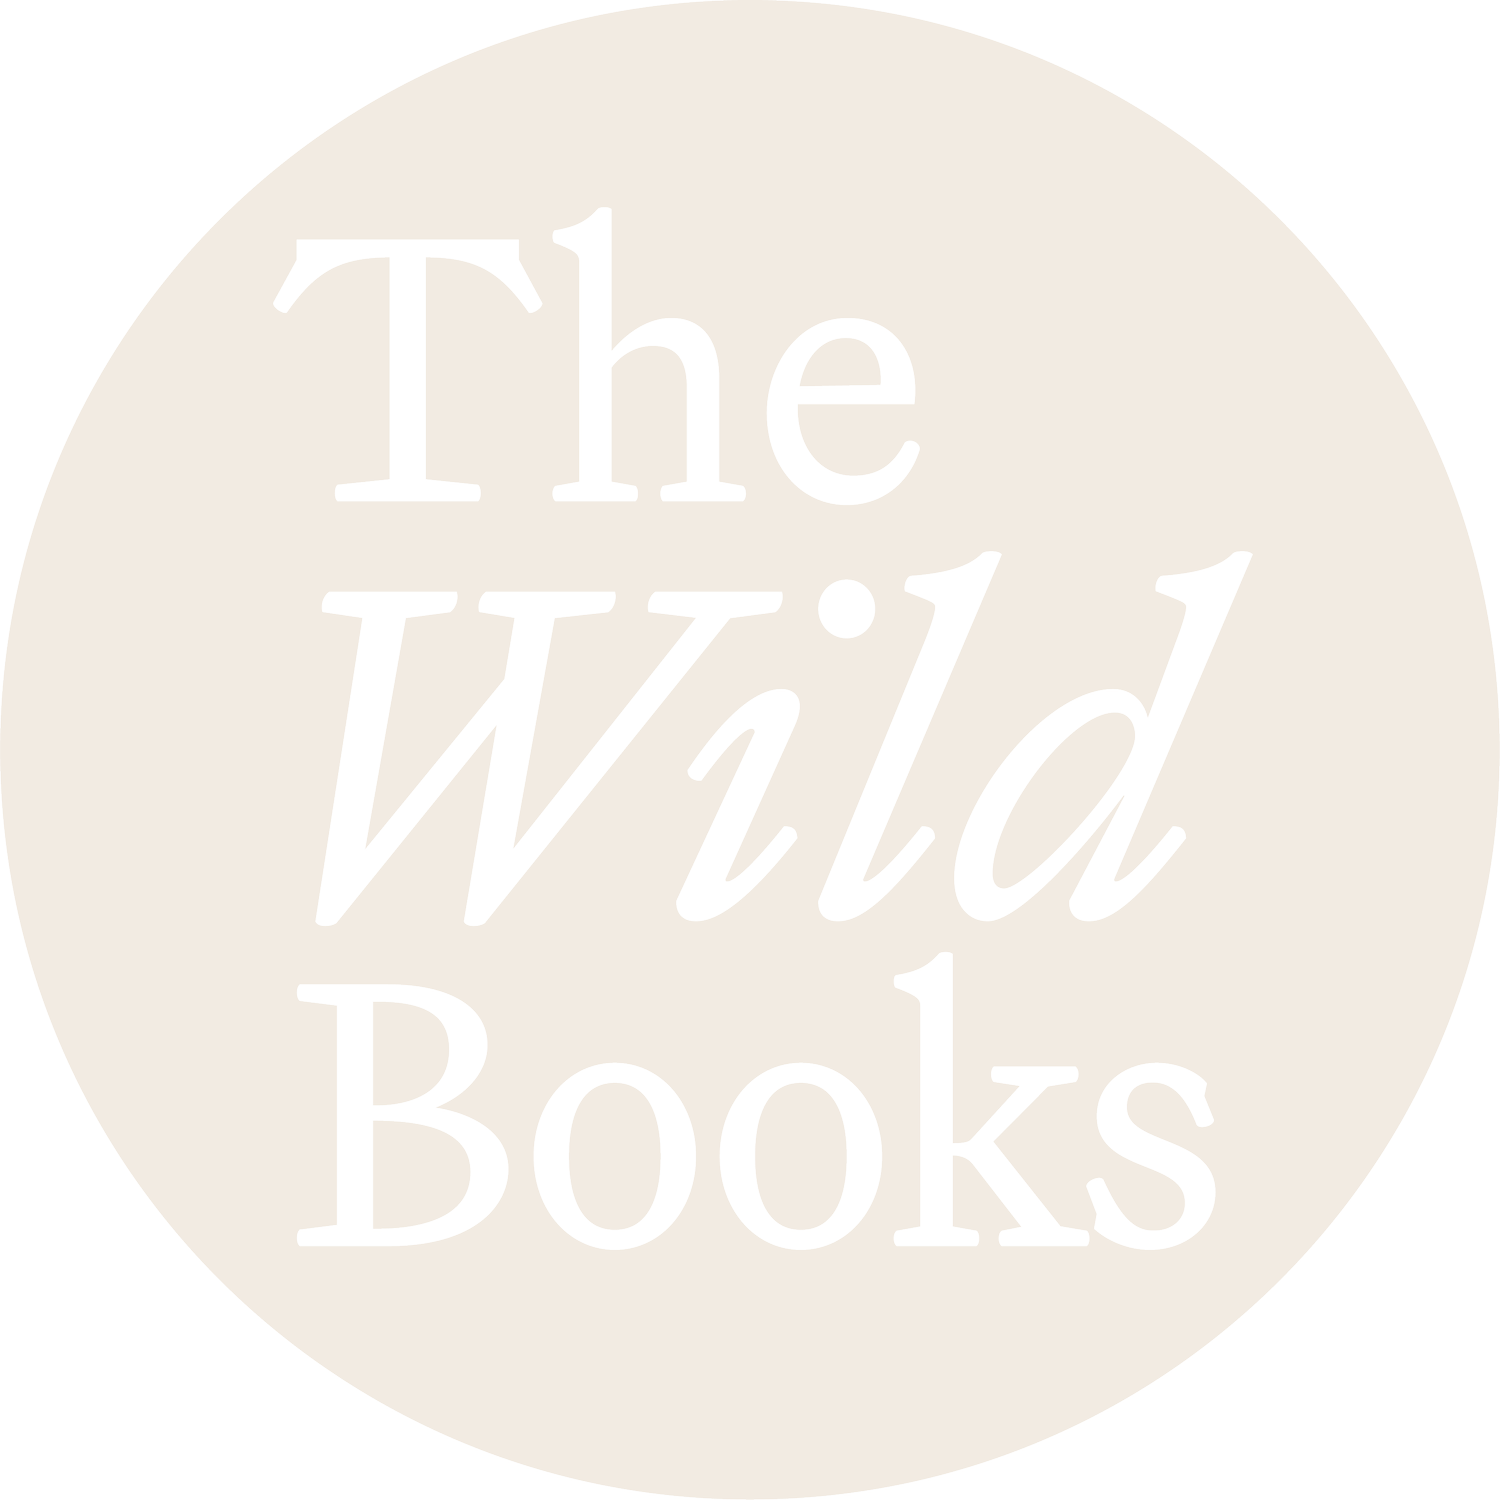 The Wild Books